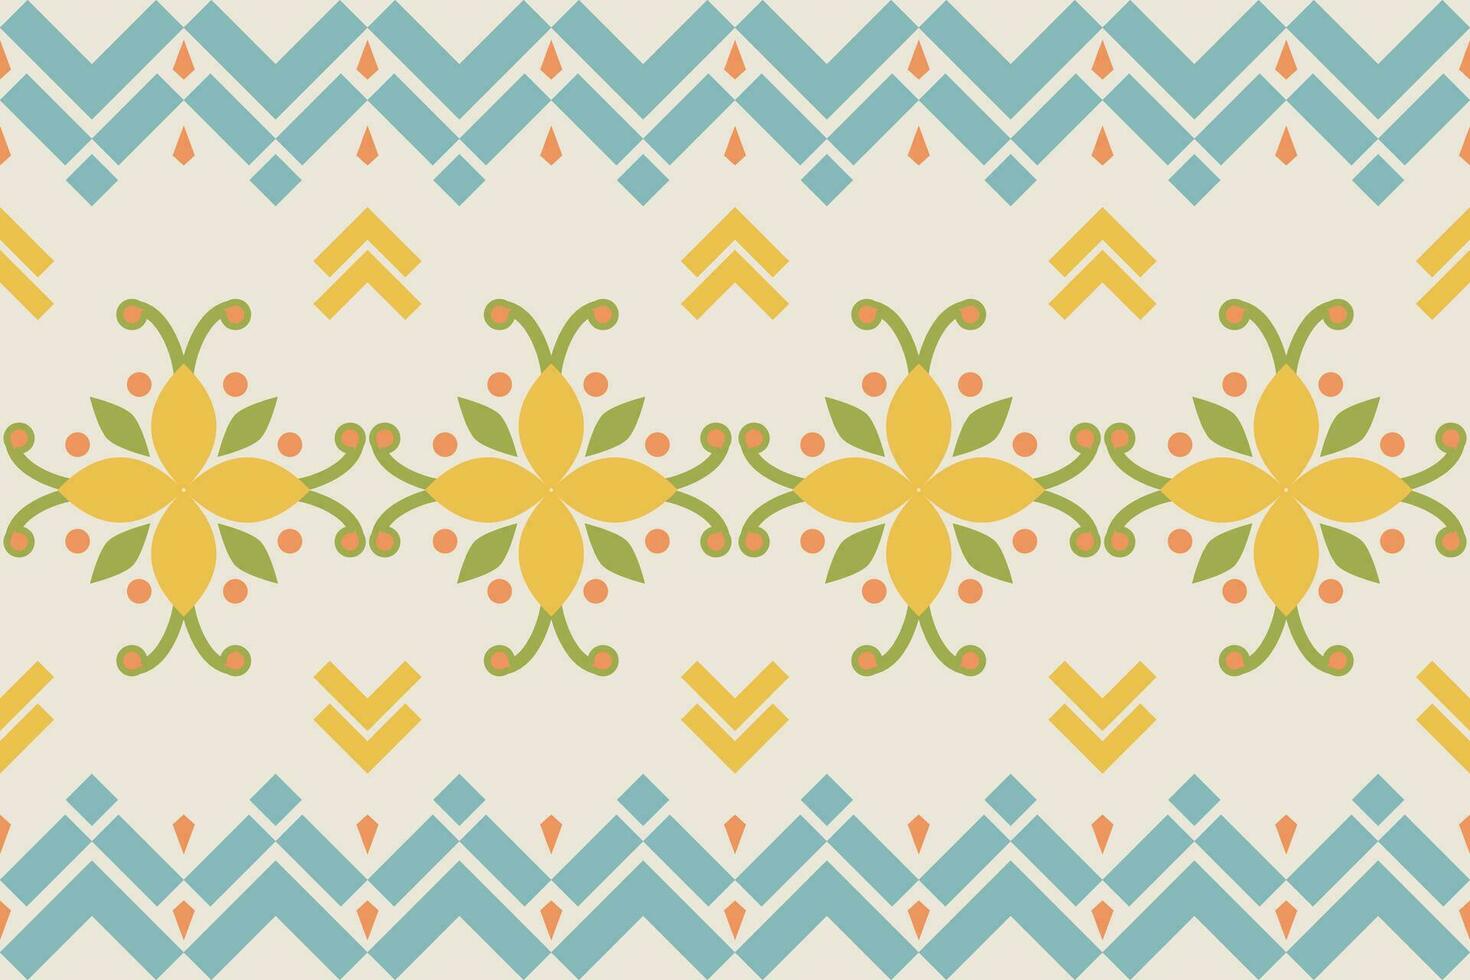 etnisk abstrakt ikat.sömlös mönster i tribal.native aztec boho vektor design.färgglad asiatisk stil blommig mönster.ikat geometrisk folk ornament.tribal etnisk vektor textur